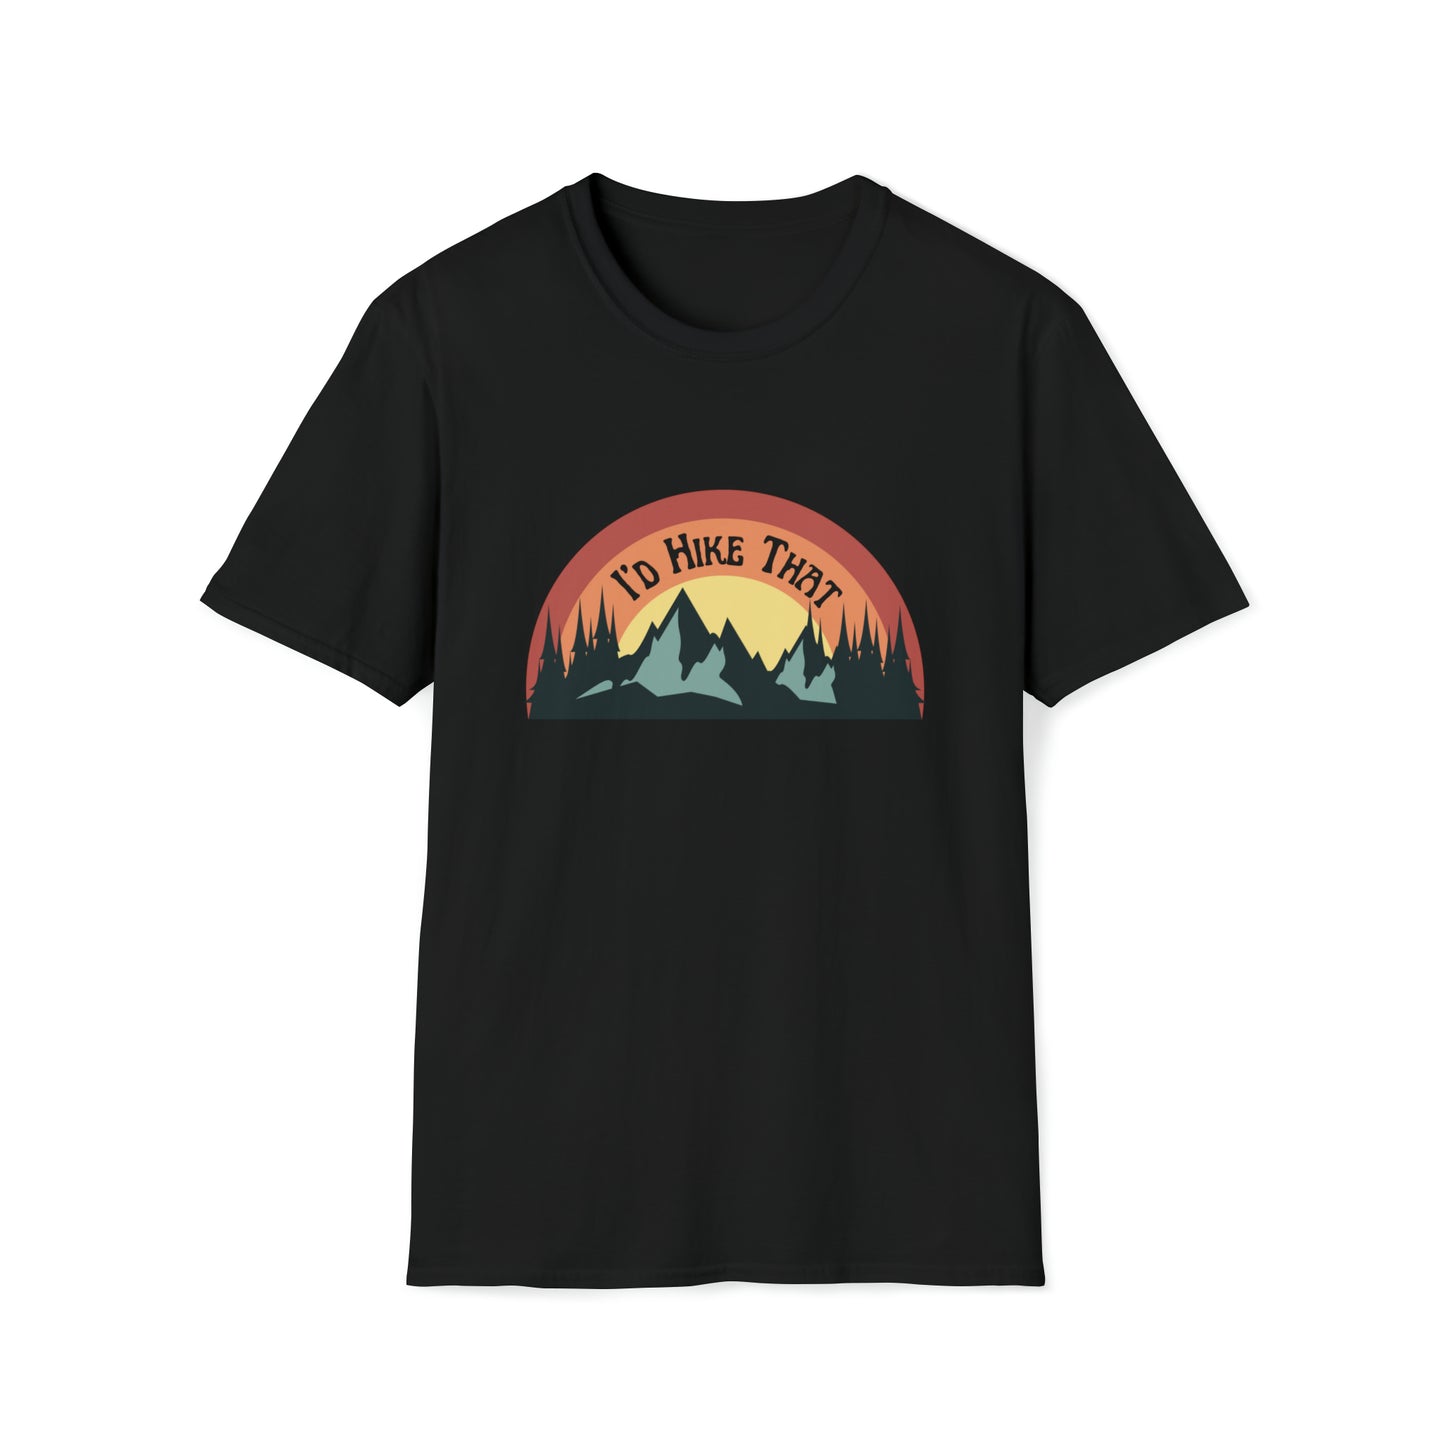 Unisex Softstyle T-Shirt, I'd Hike That Shirt, Adventure Shirt, Hiking Tee, Mountain Hiking Shirt, Camping Shirts, Hike More Worry Less Shirt